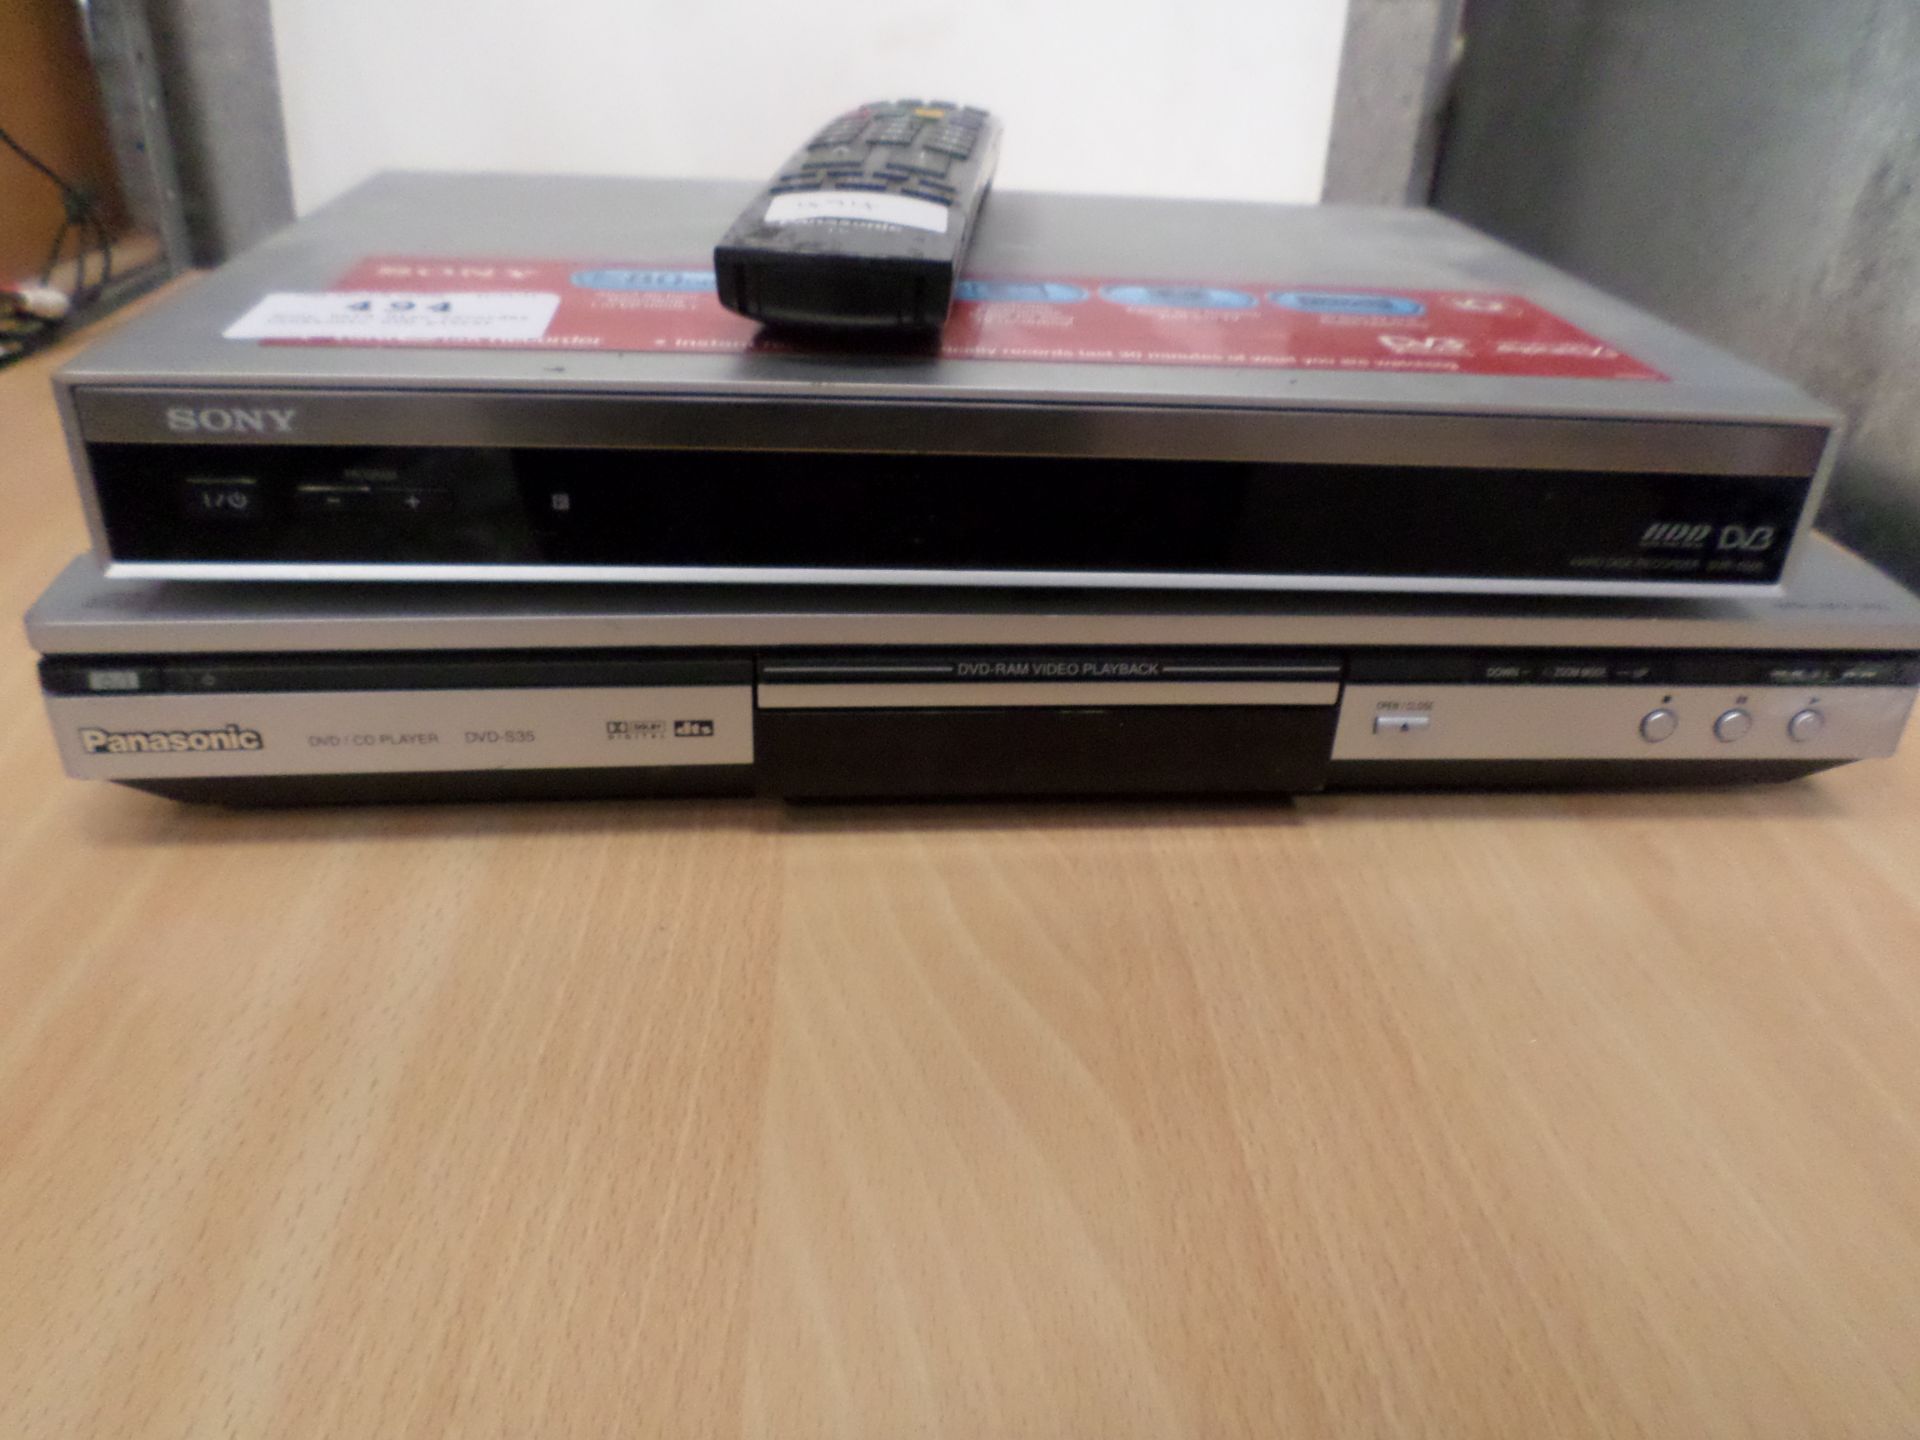 Sony hard disc recorder, Panasonic DVD player